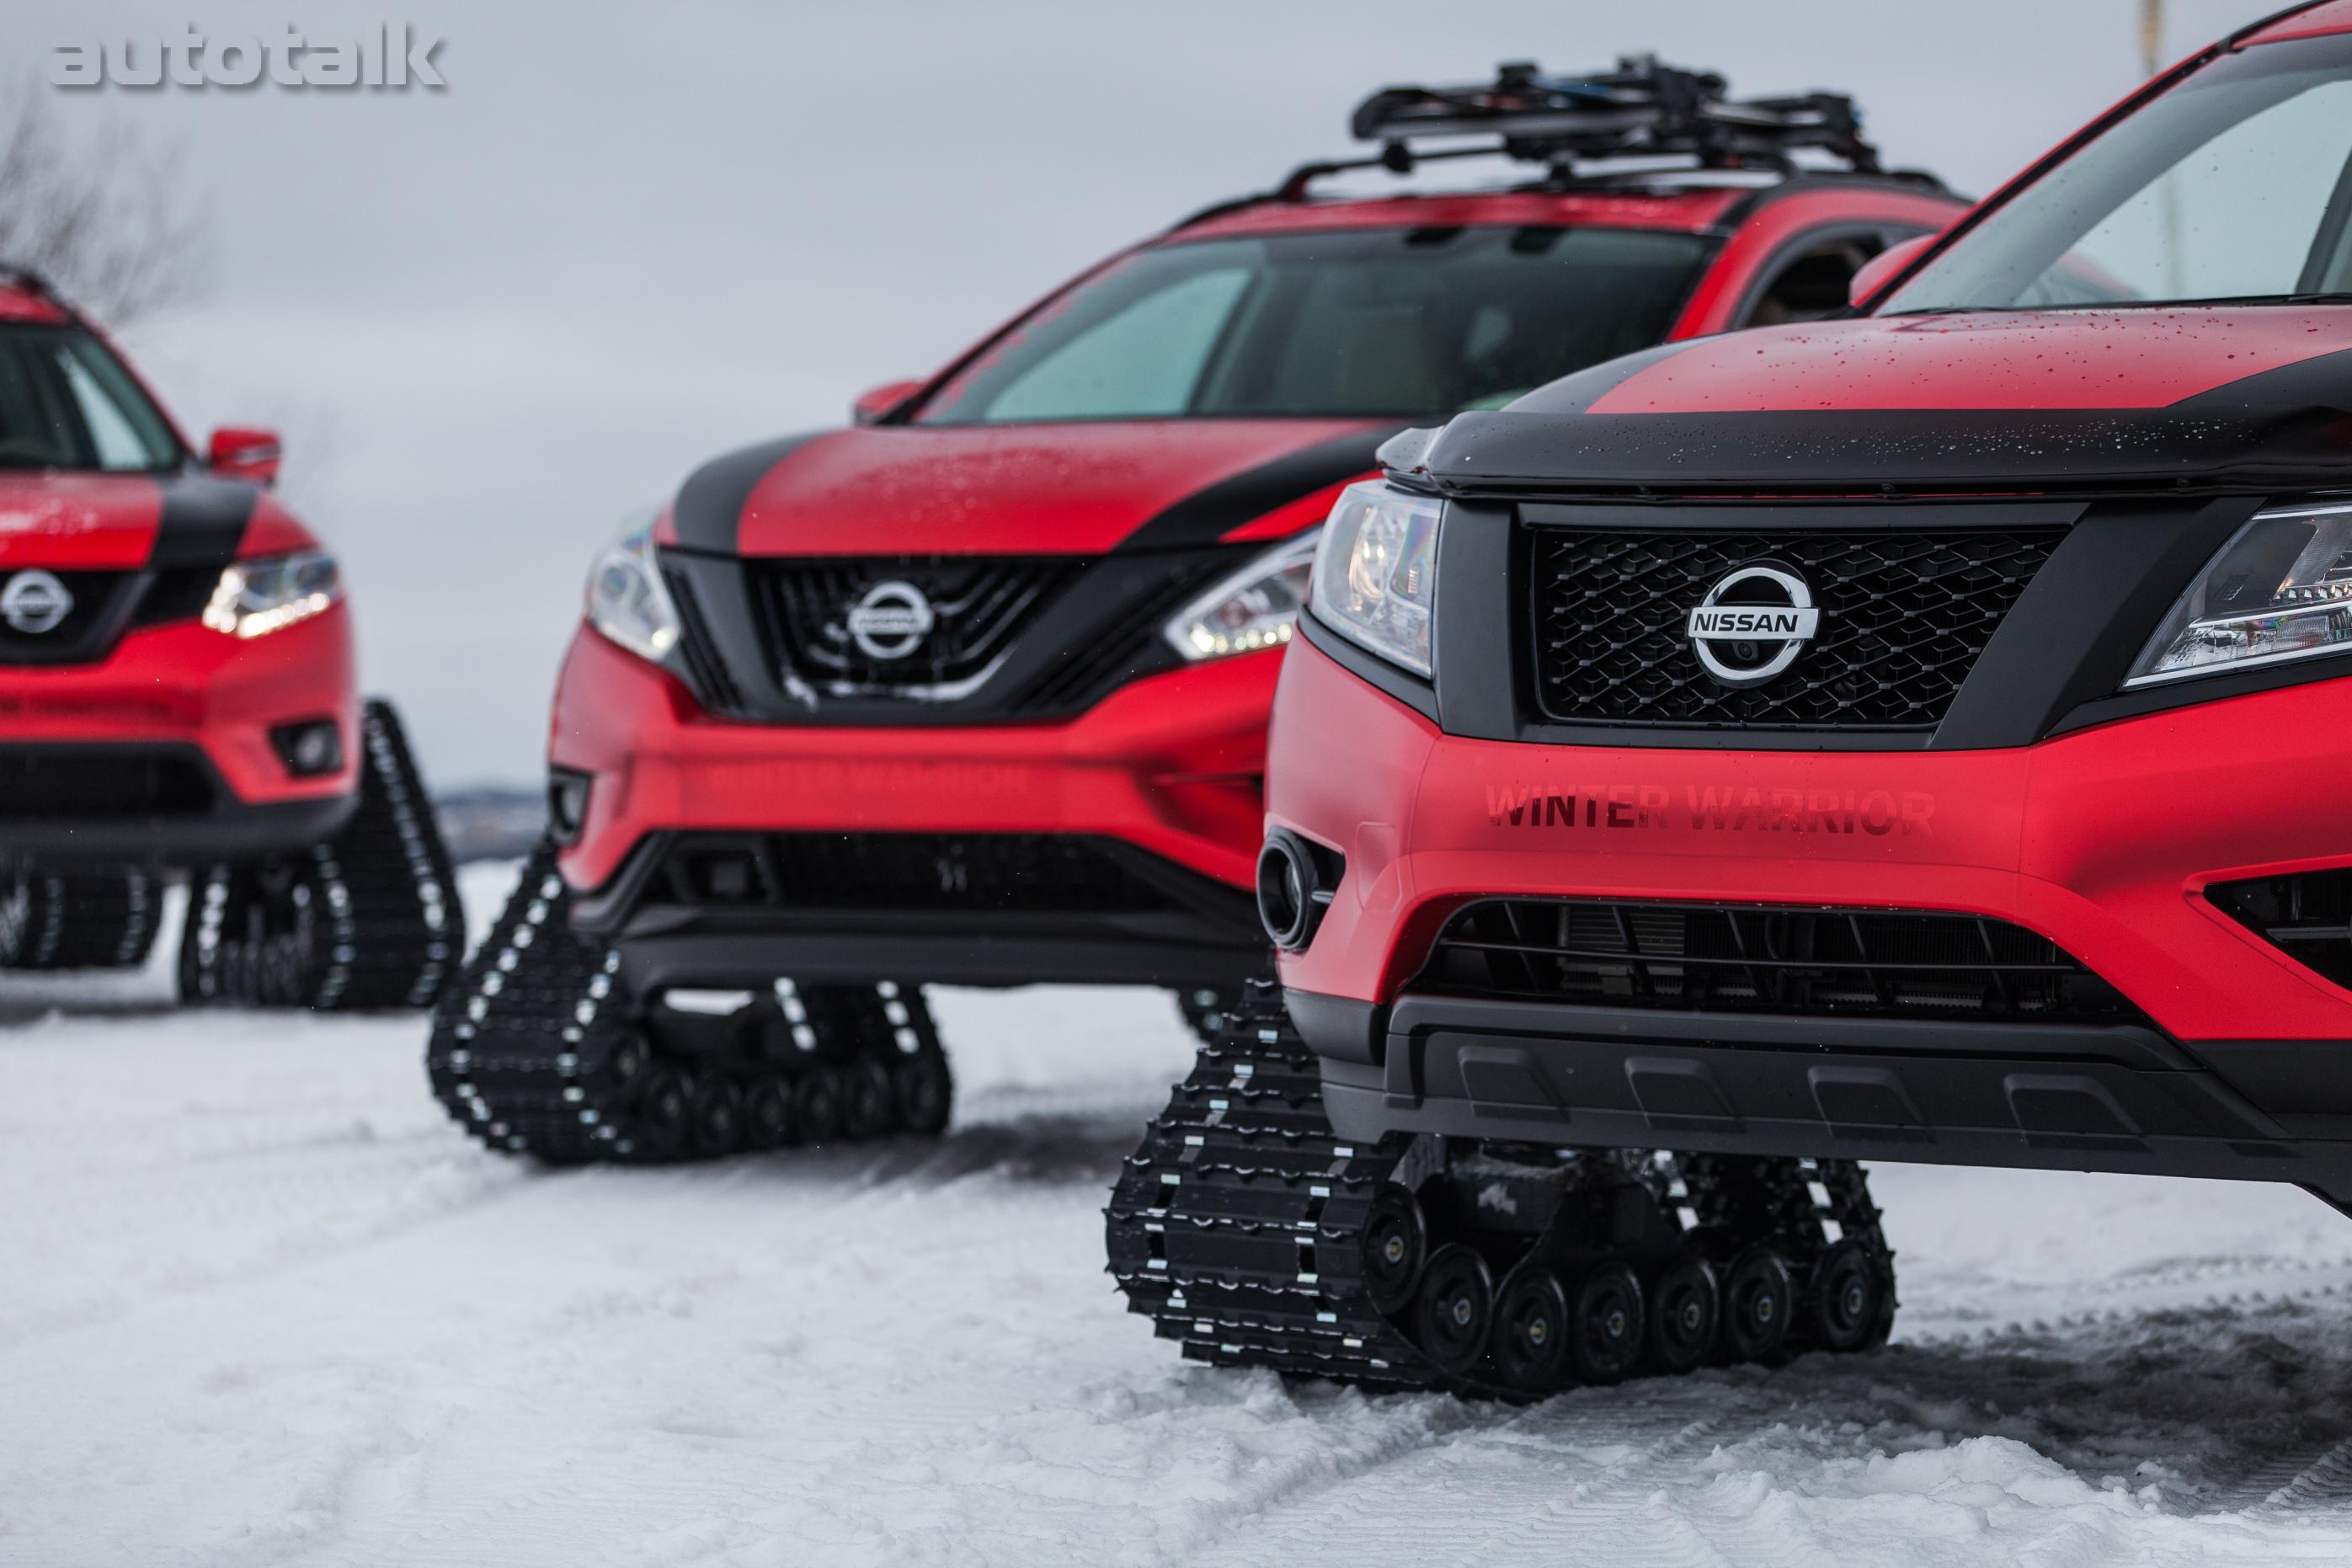 Nissan Winter Warrior Concepts